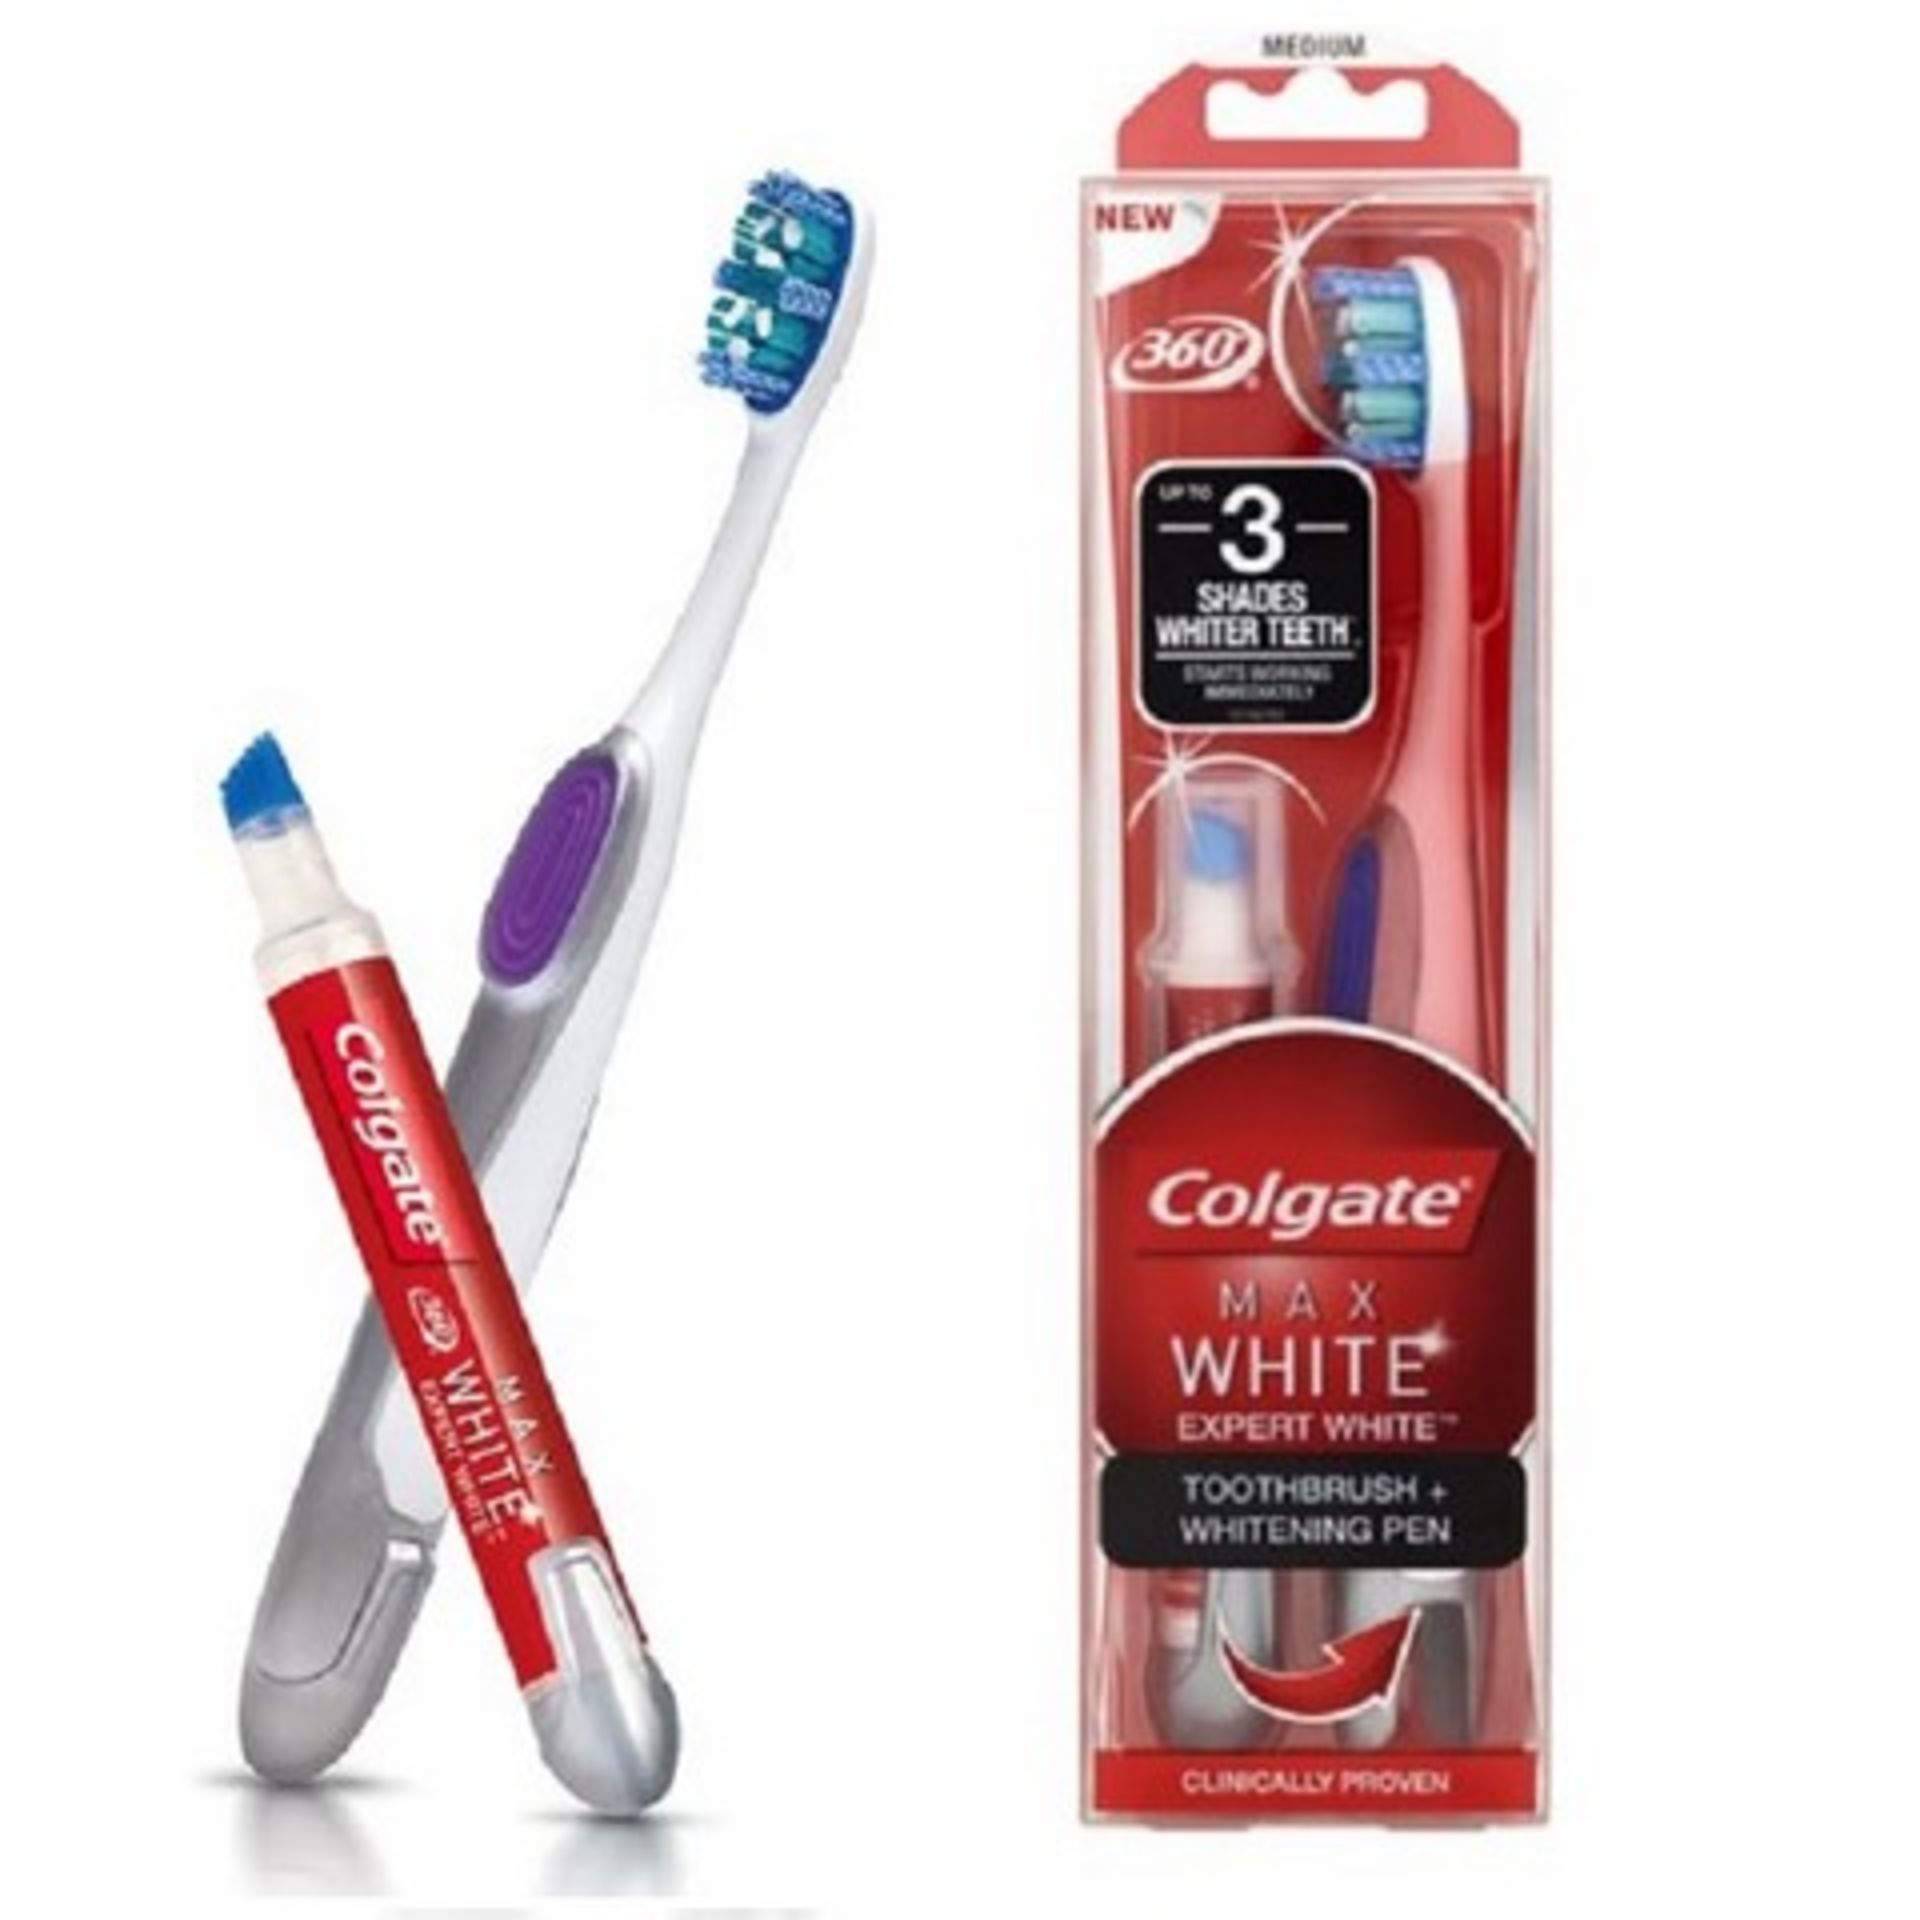 V Brand New Colgate (£12.50 Supermarket Price) Max White Expert White Toothbrush and Whitening Pen